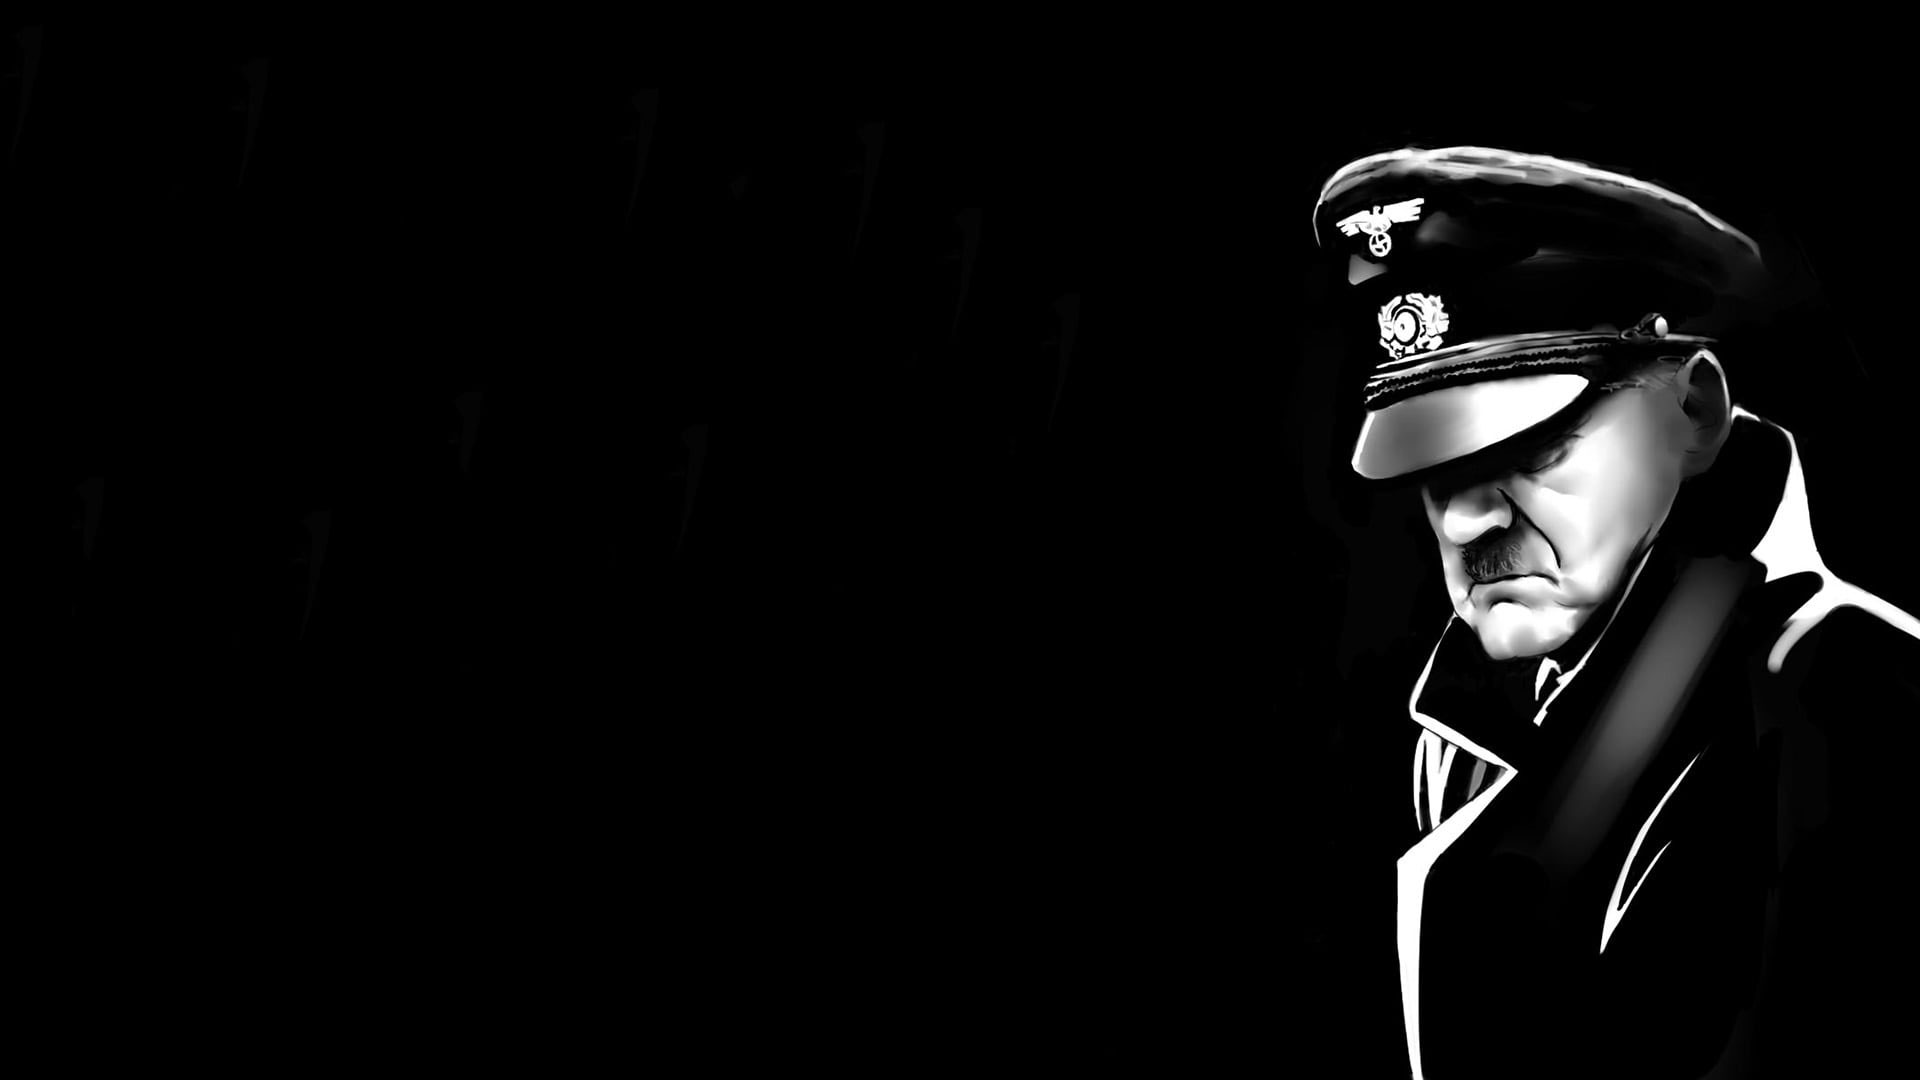 Grayscale photo of man wearing peaked hat wallpaper, Adolf Hitler, Nazi